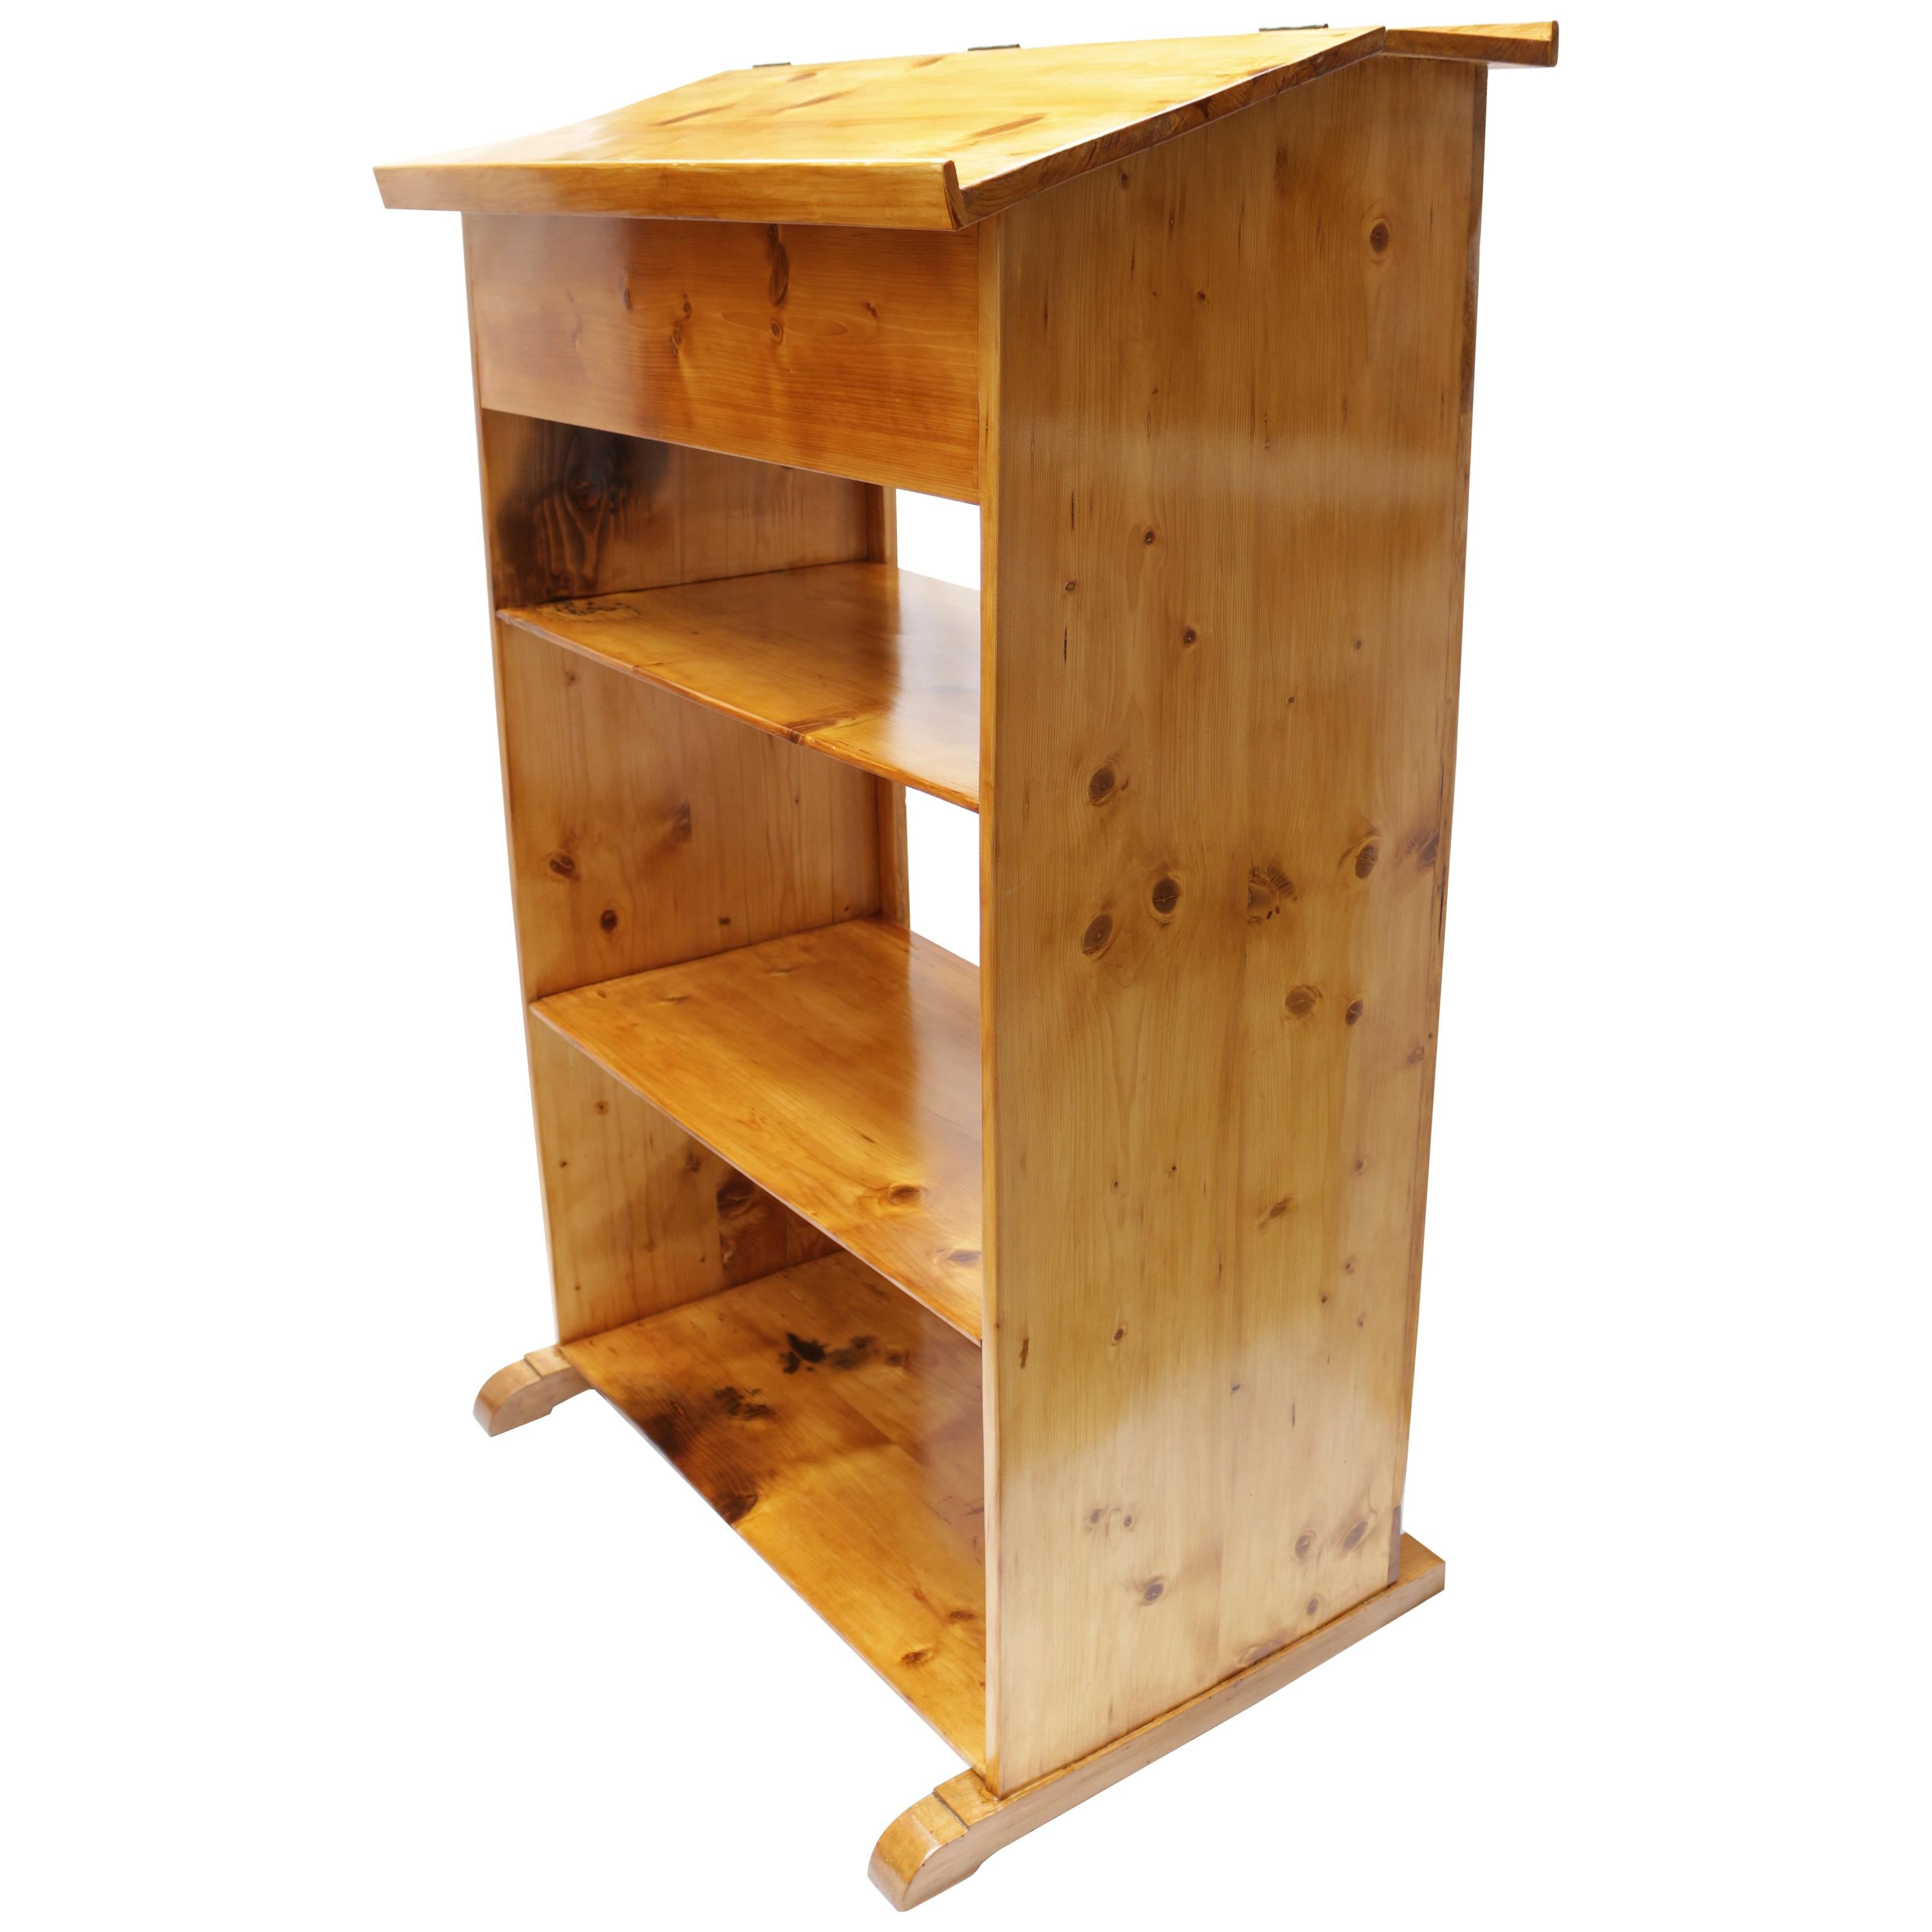 Art Nouveau High Desk / Shelf / Lectern Made of Pine Wood